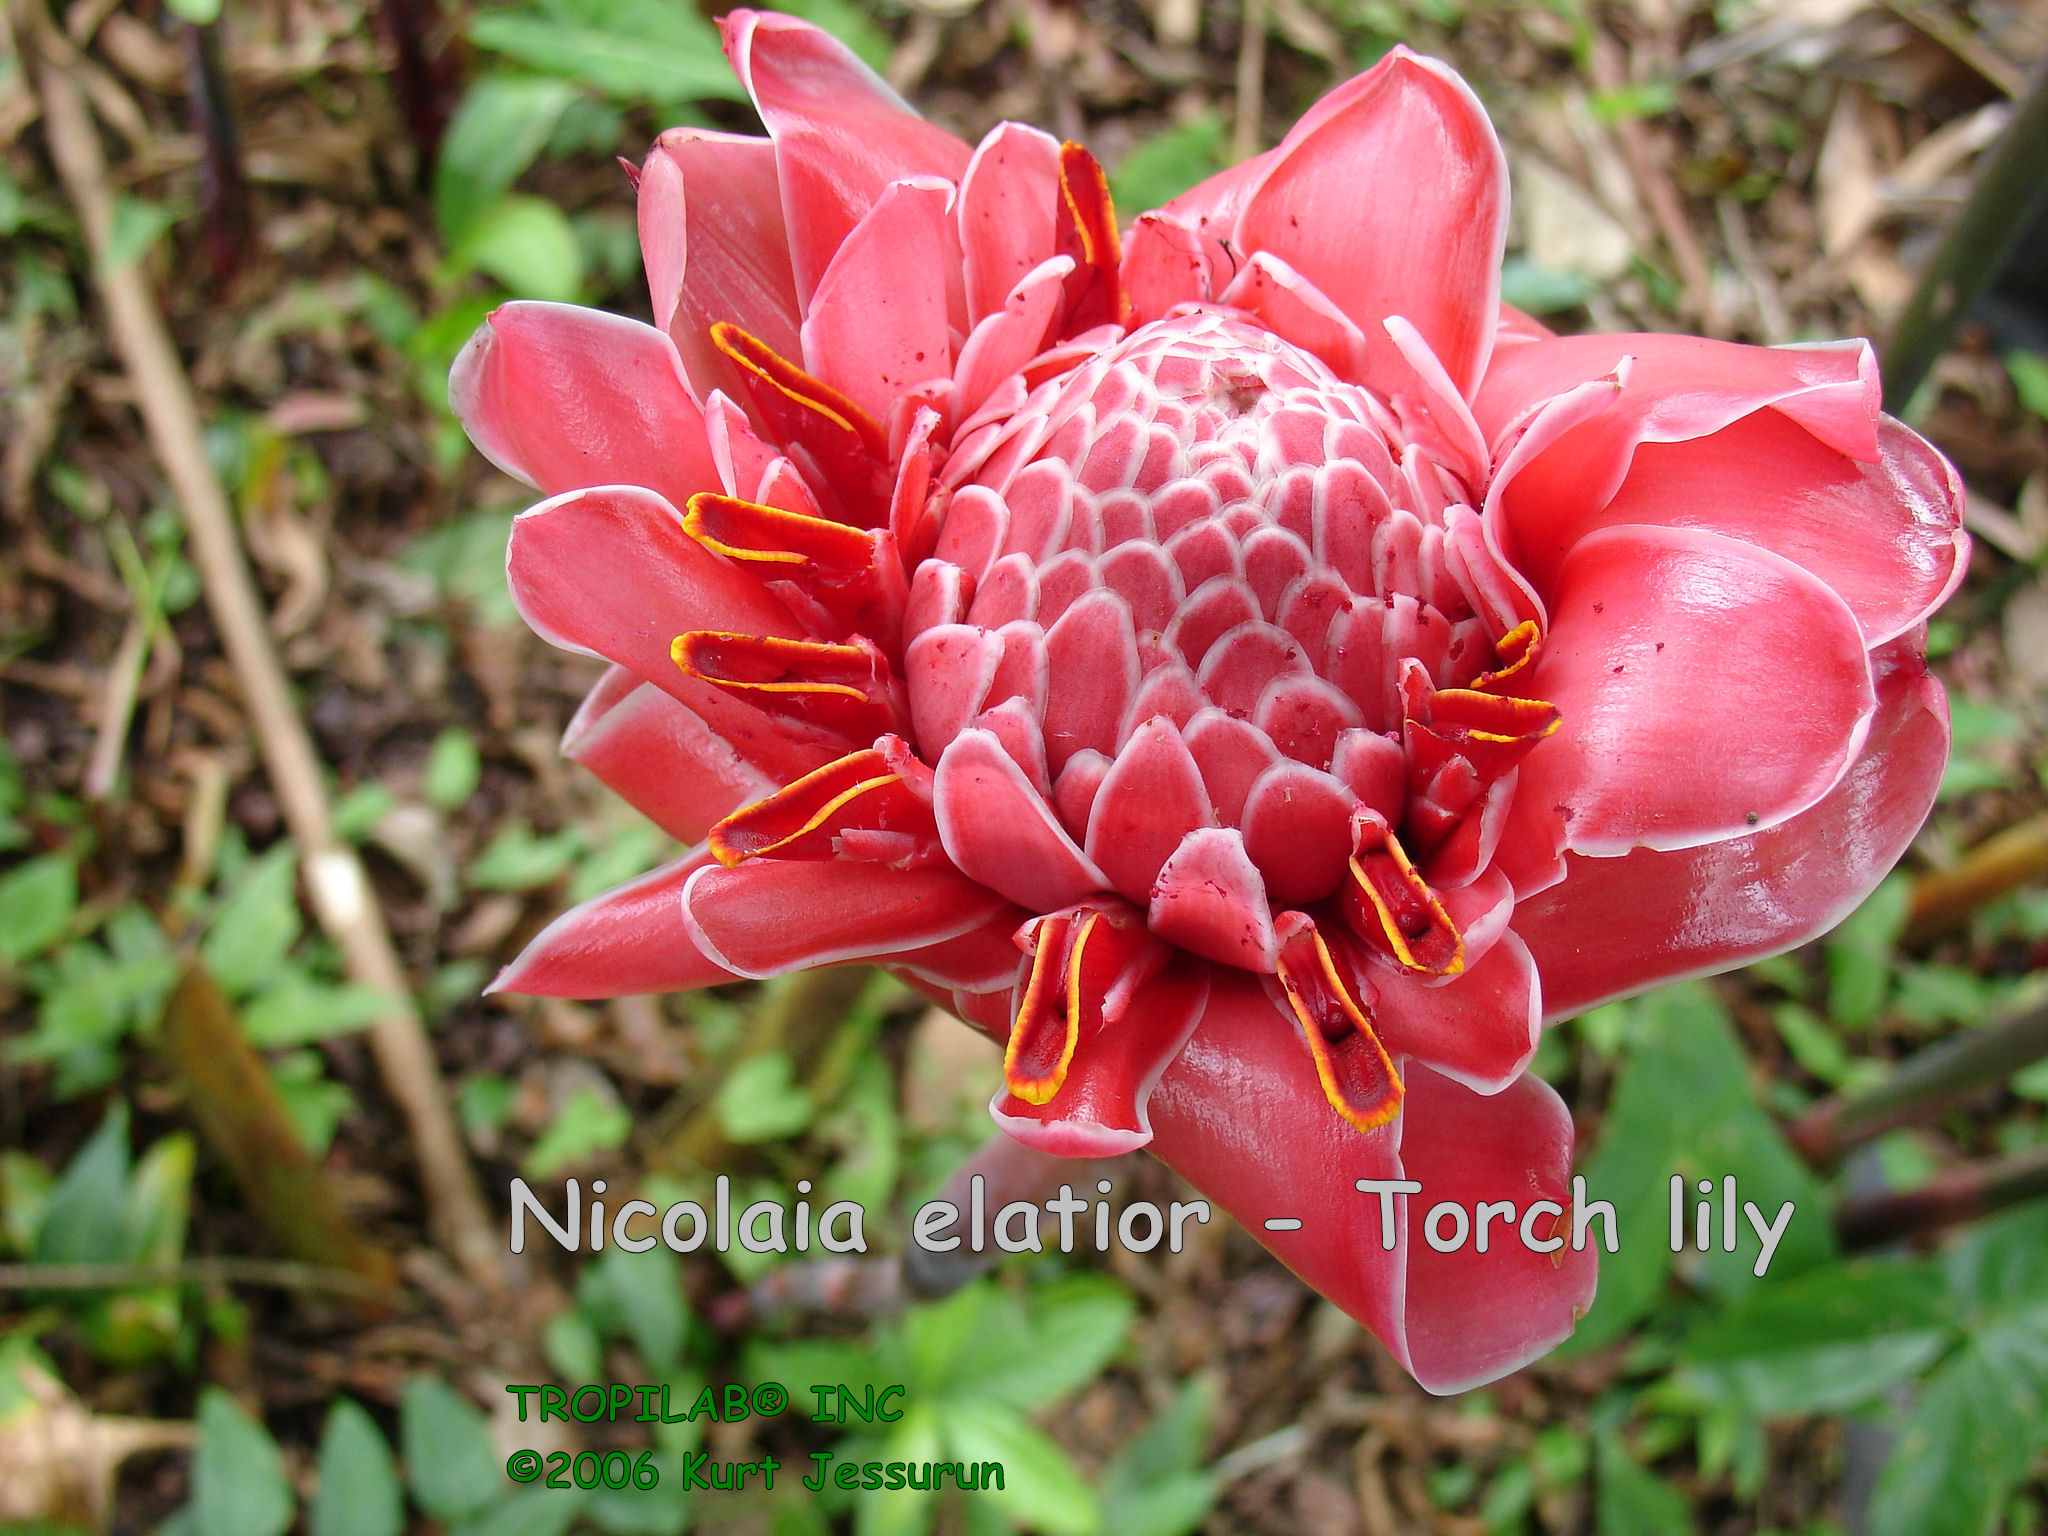 Nicolaia elatior - Torch lily